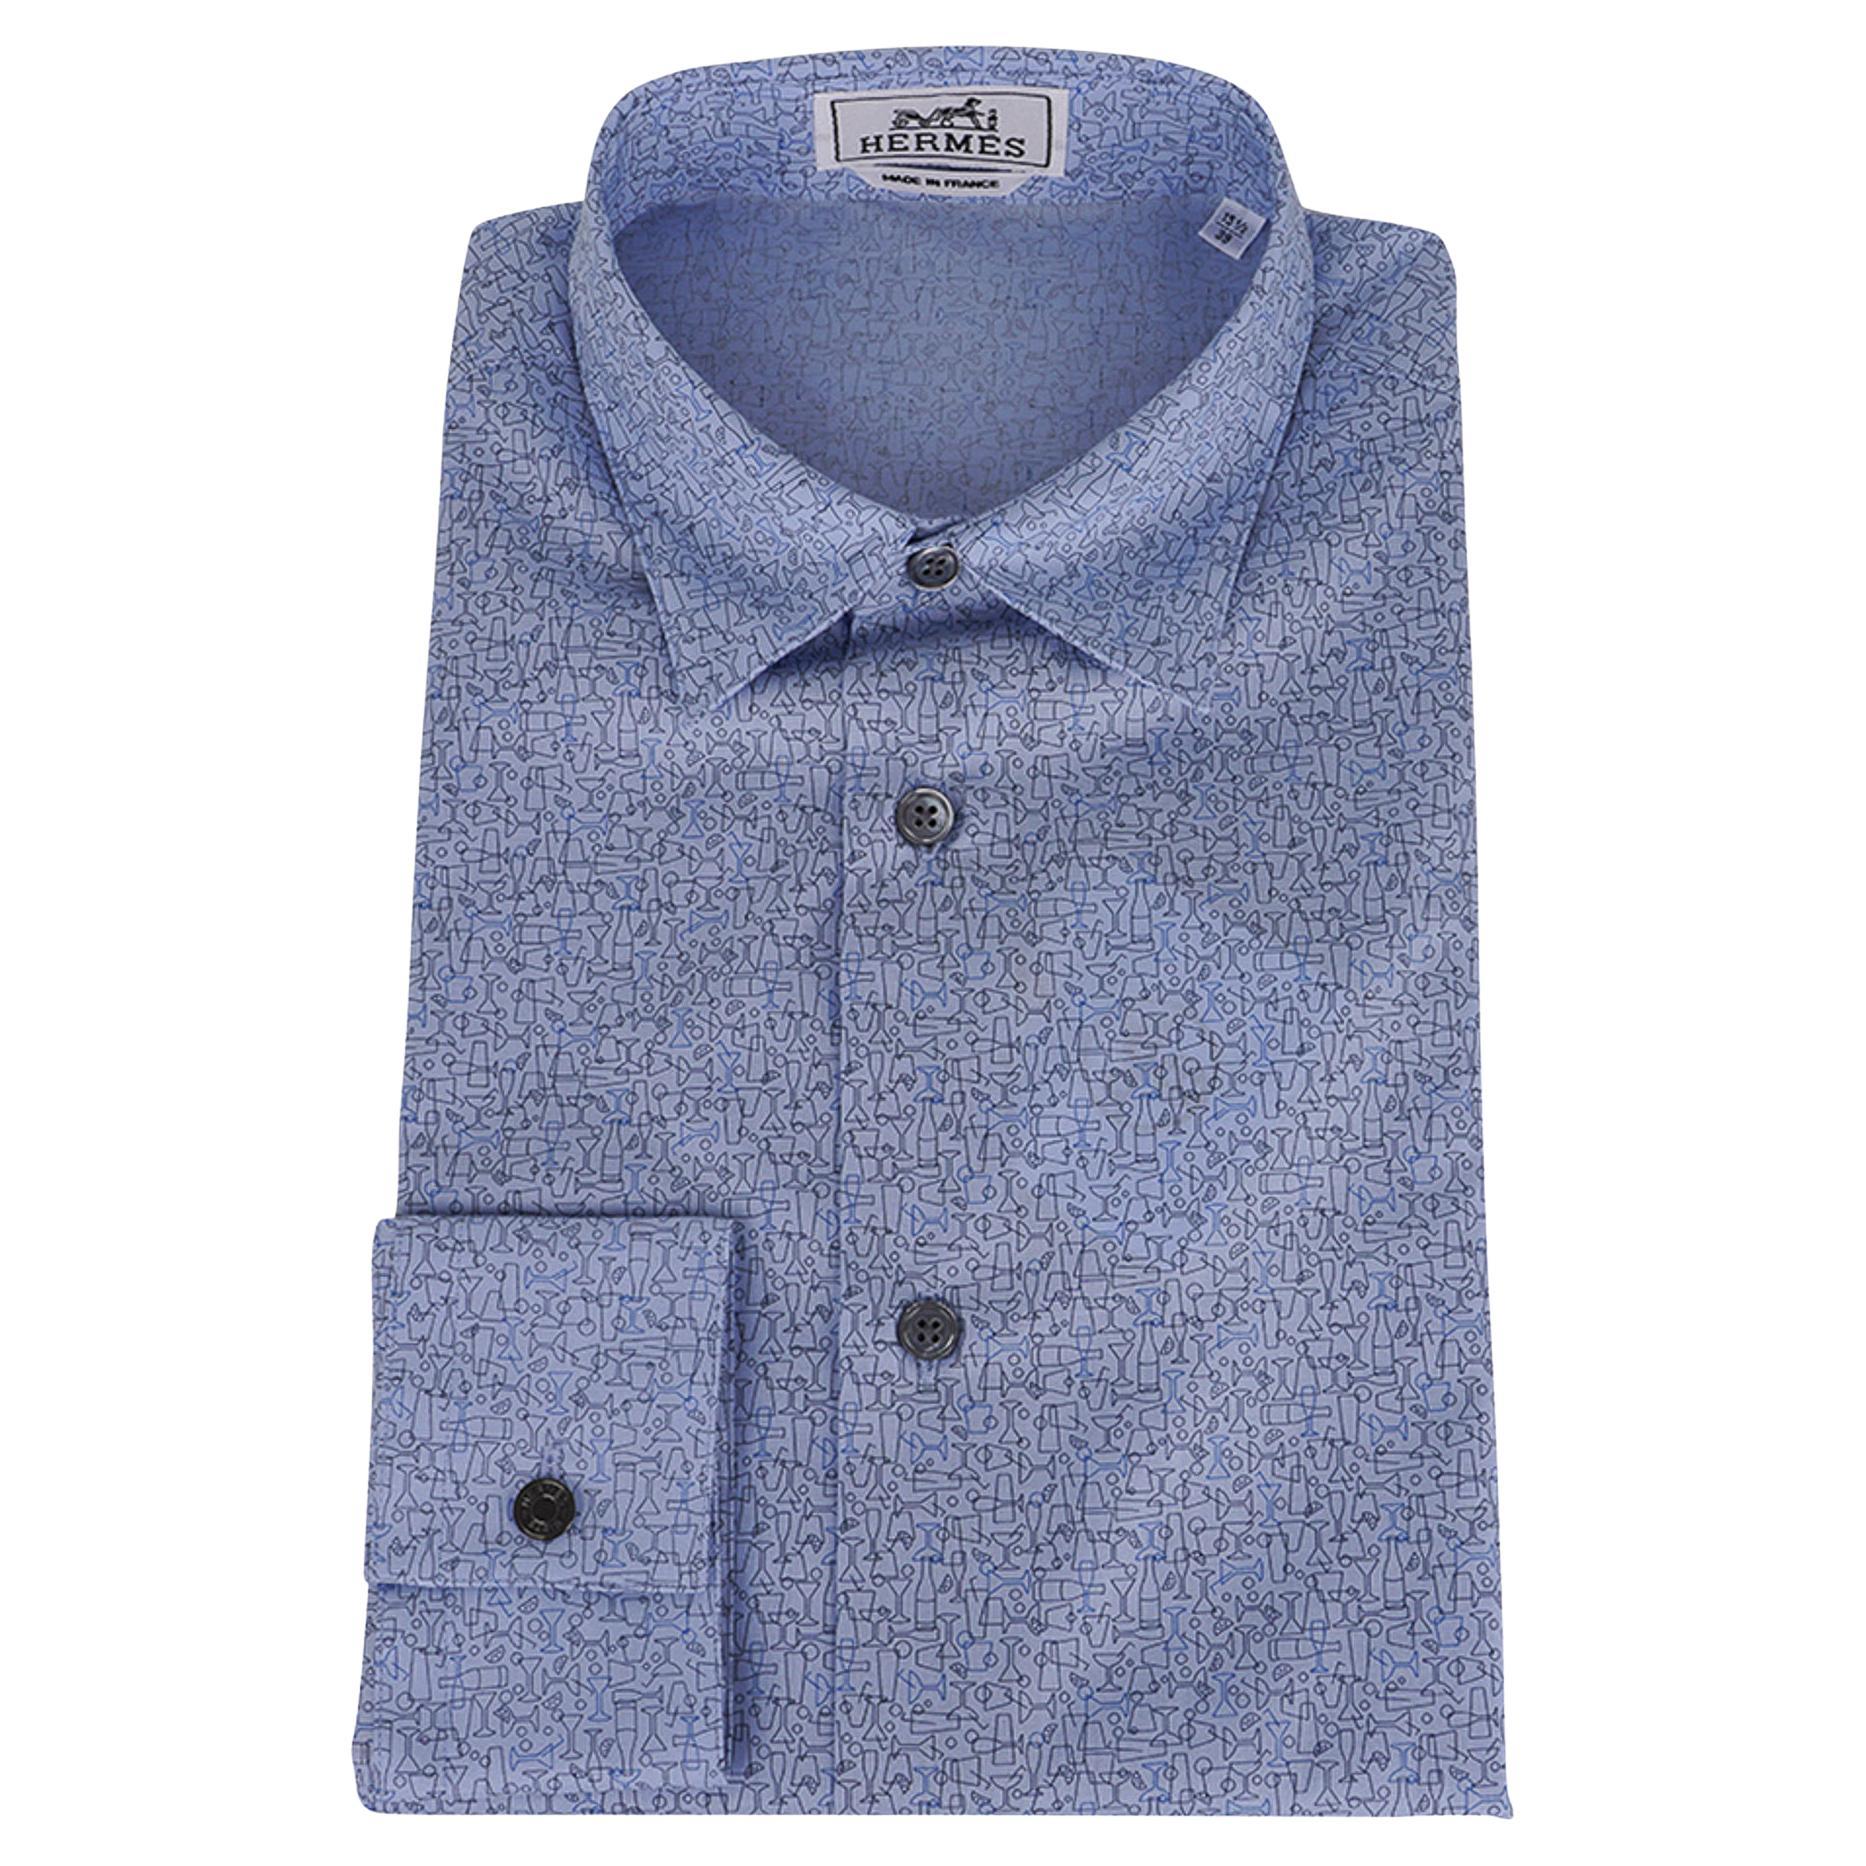 Hermes Men's Cheers! Shirt Cotton Bleu Pale Button Down Shirt 39 / 15.5 New For Sale